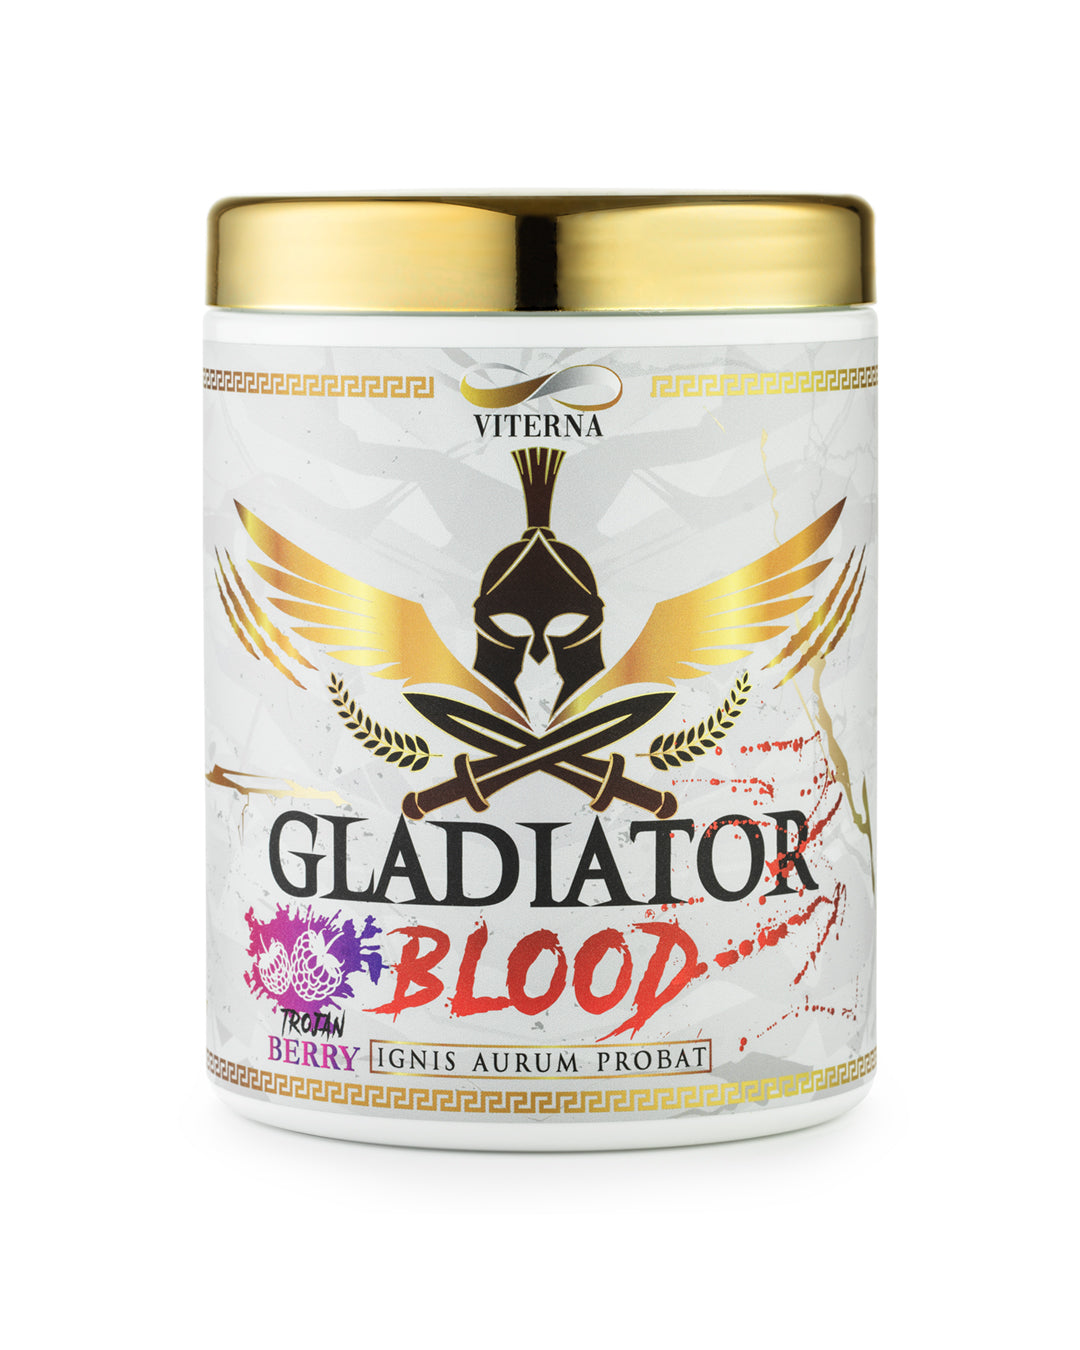 Viterna Gladiator Blood 460g - Trojan Berry